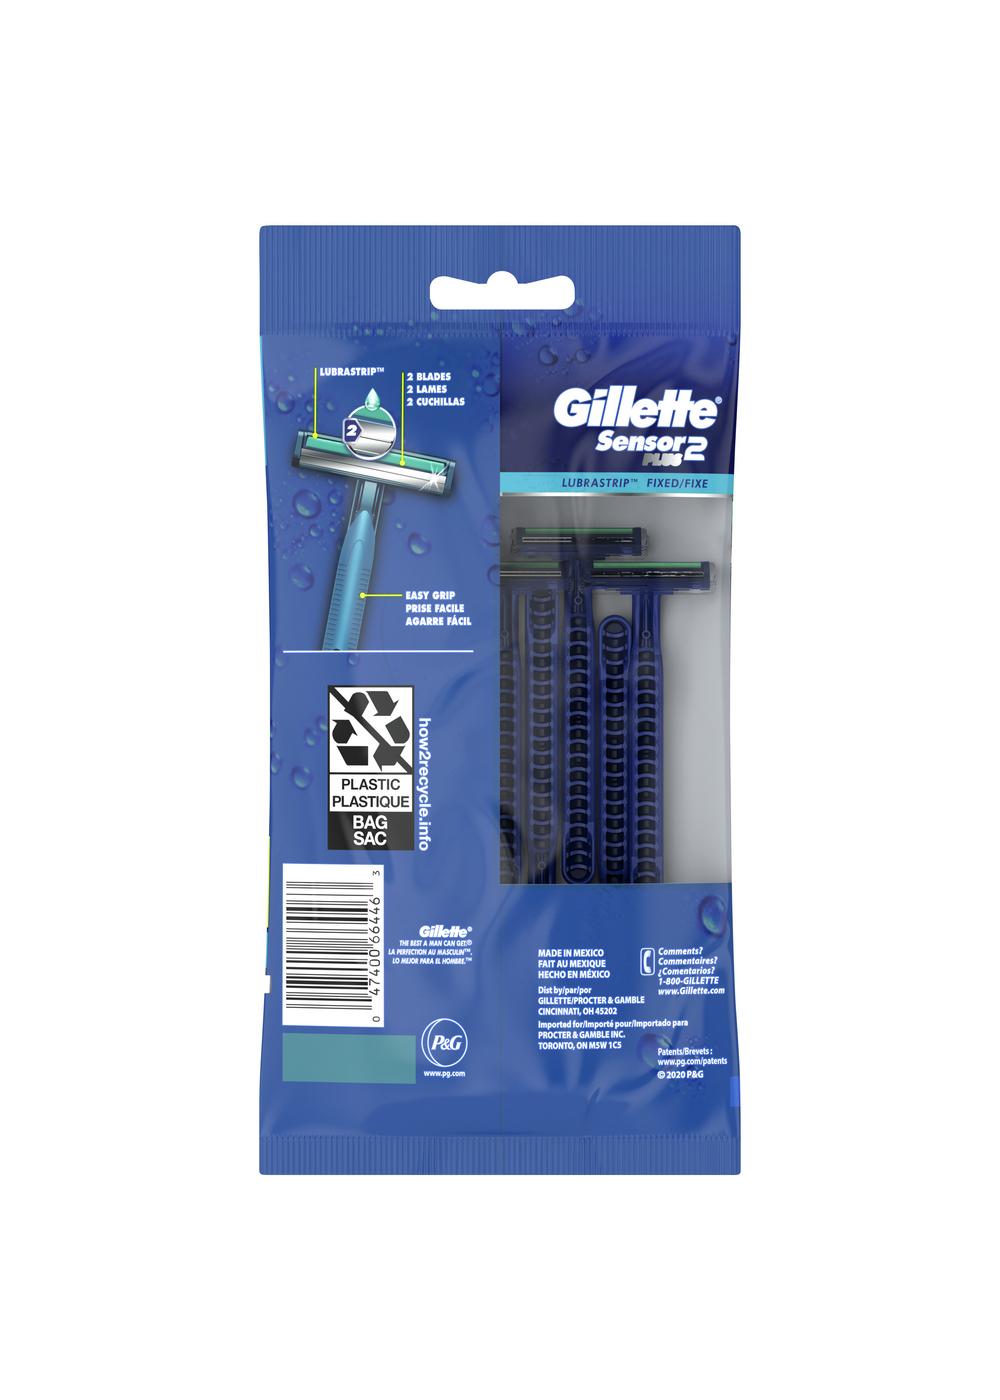 Gillette Sensor2 Plus Disposable Razors; image 7 of 8